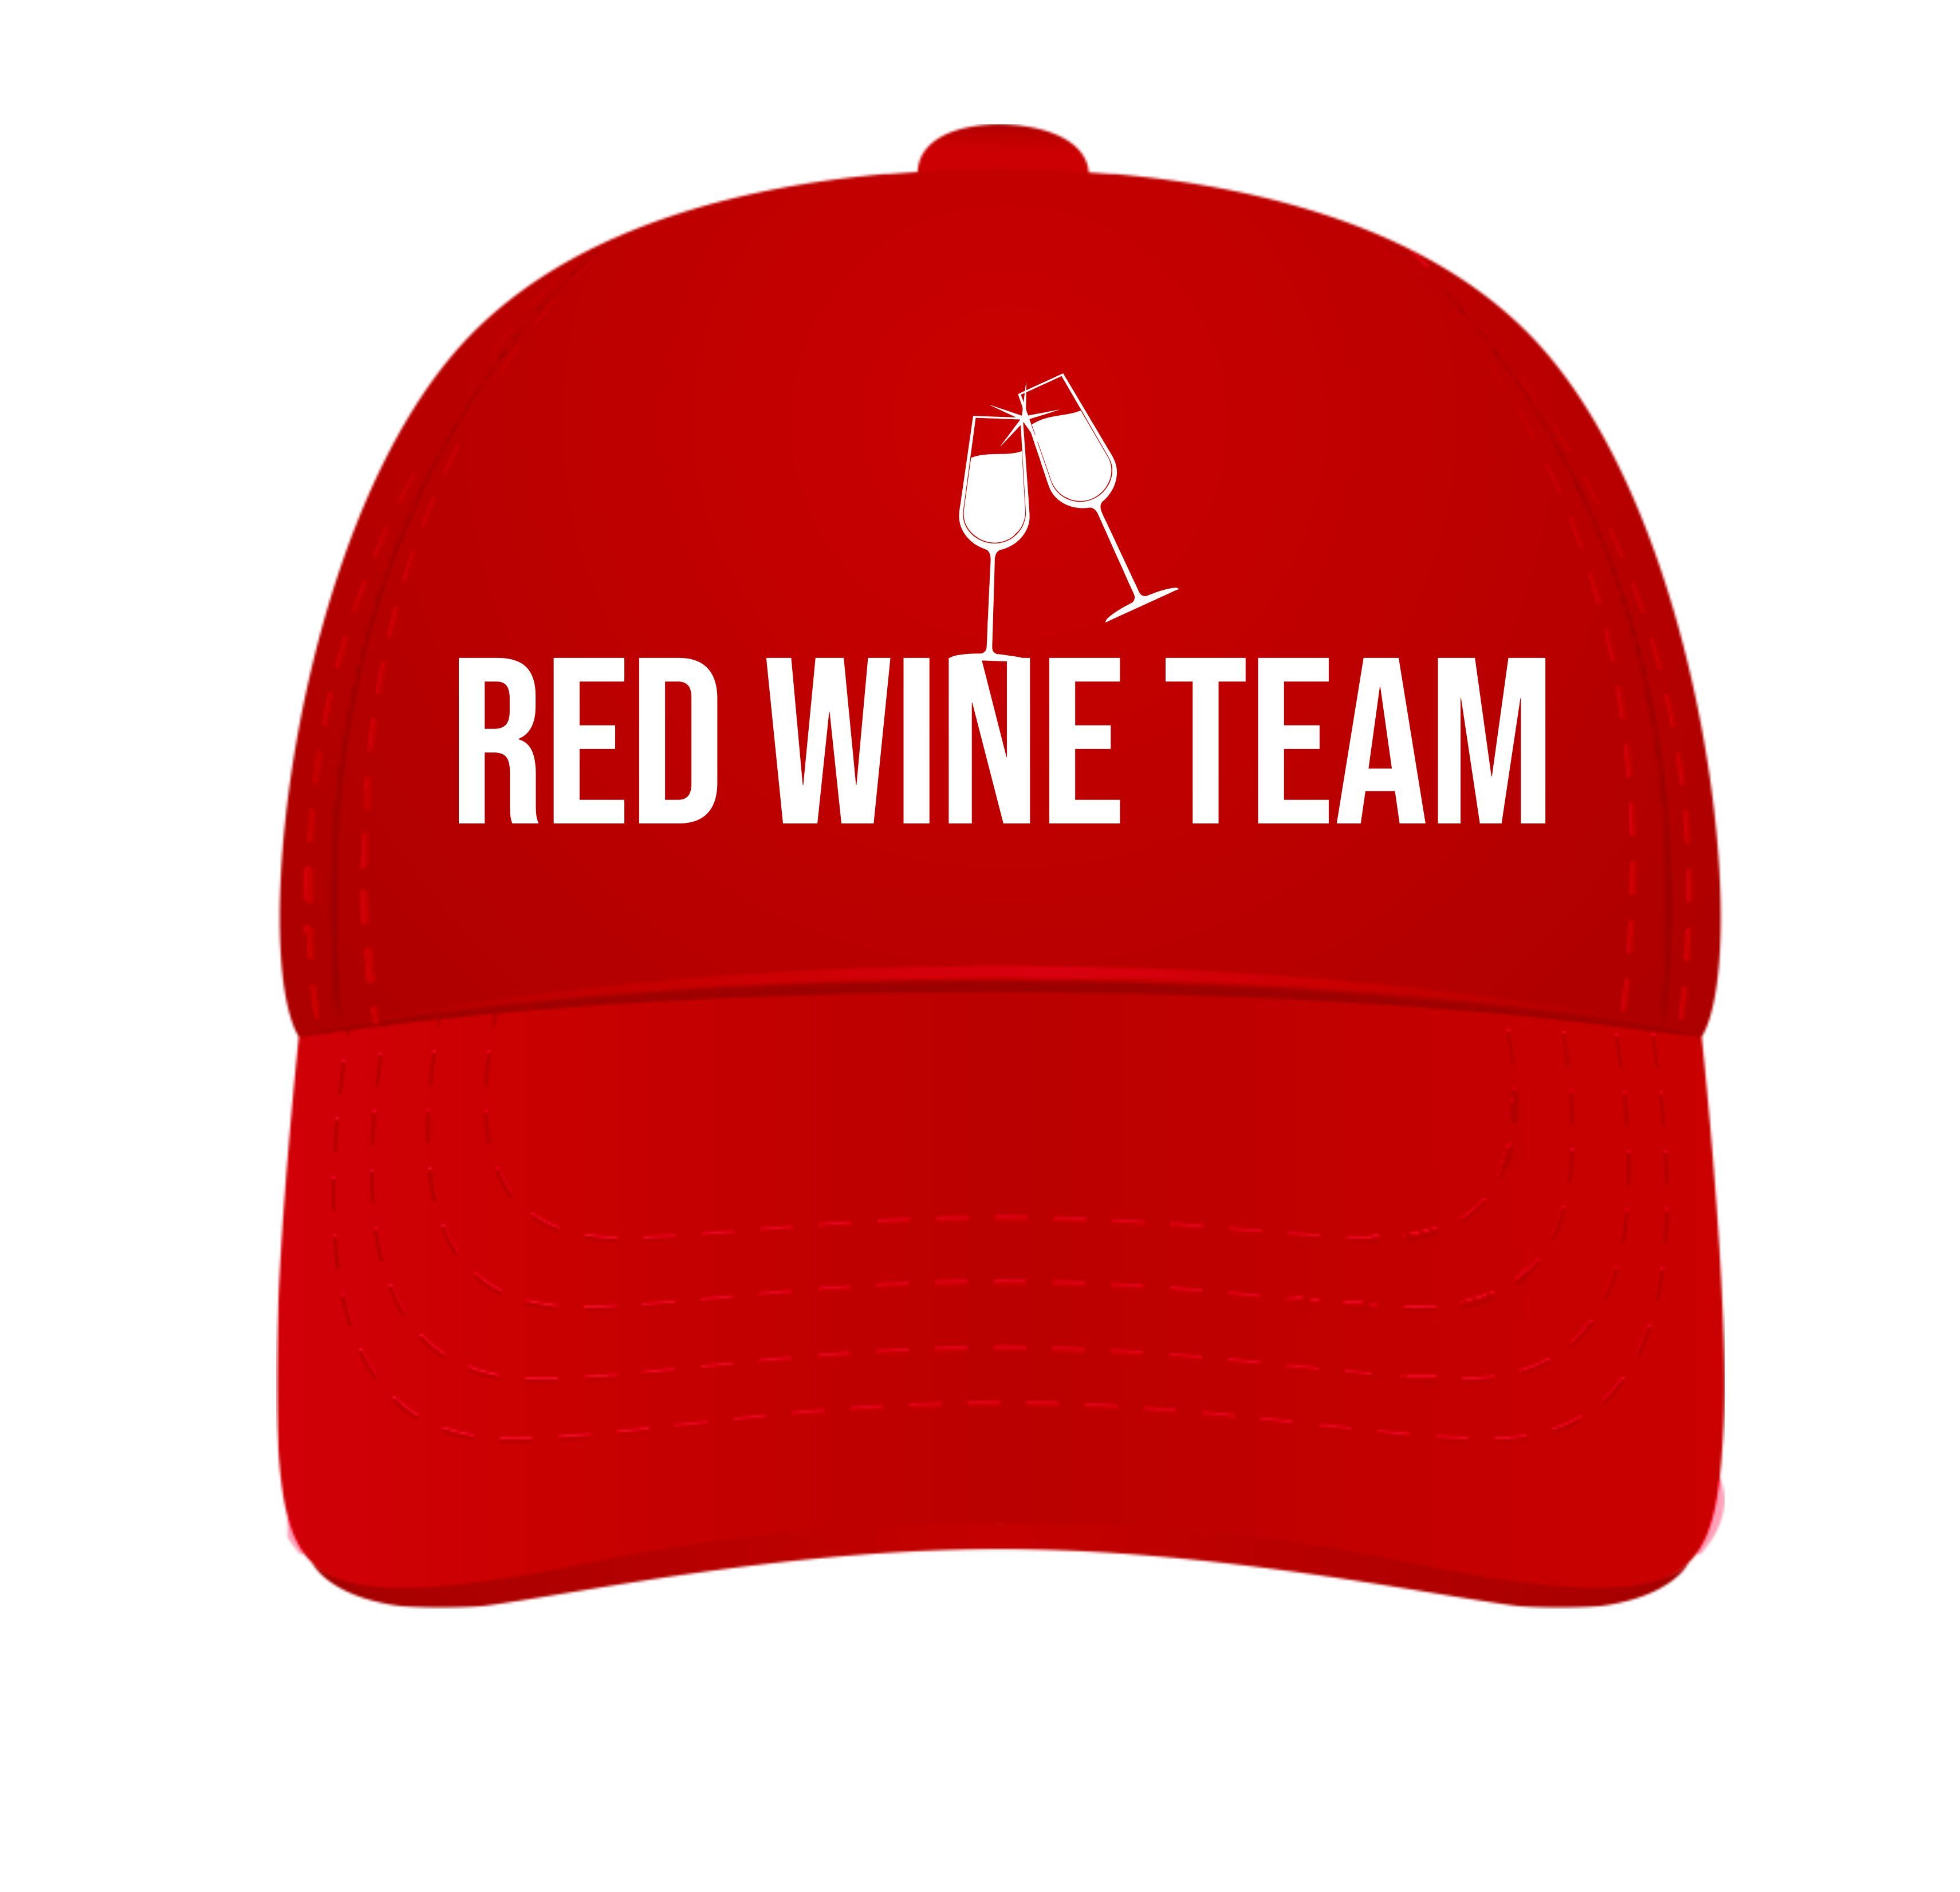 Rode pet red wine team